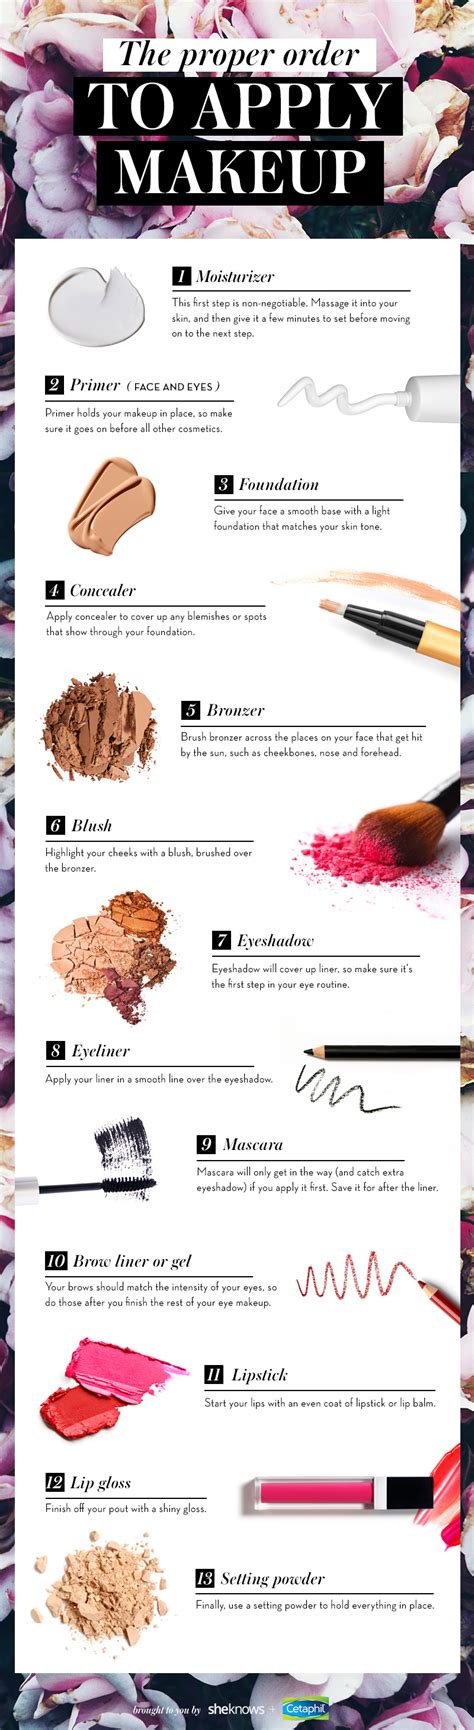 correct makeup steps